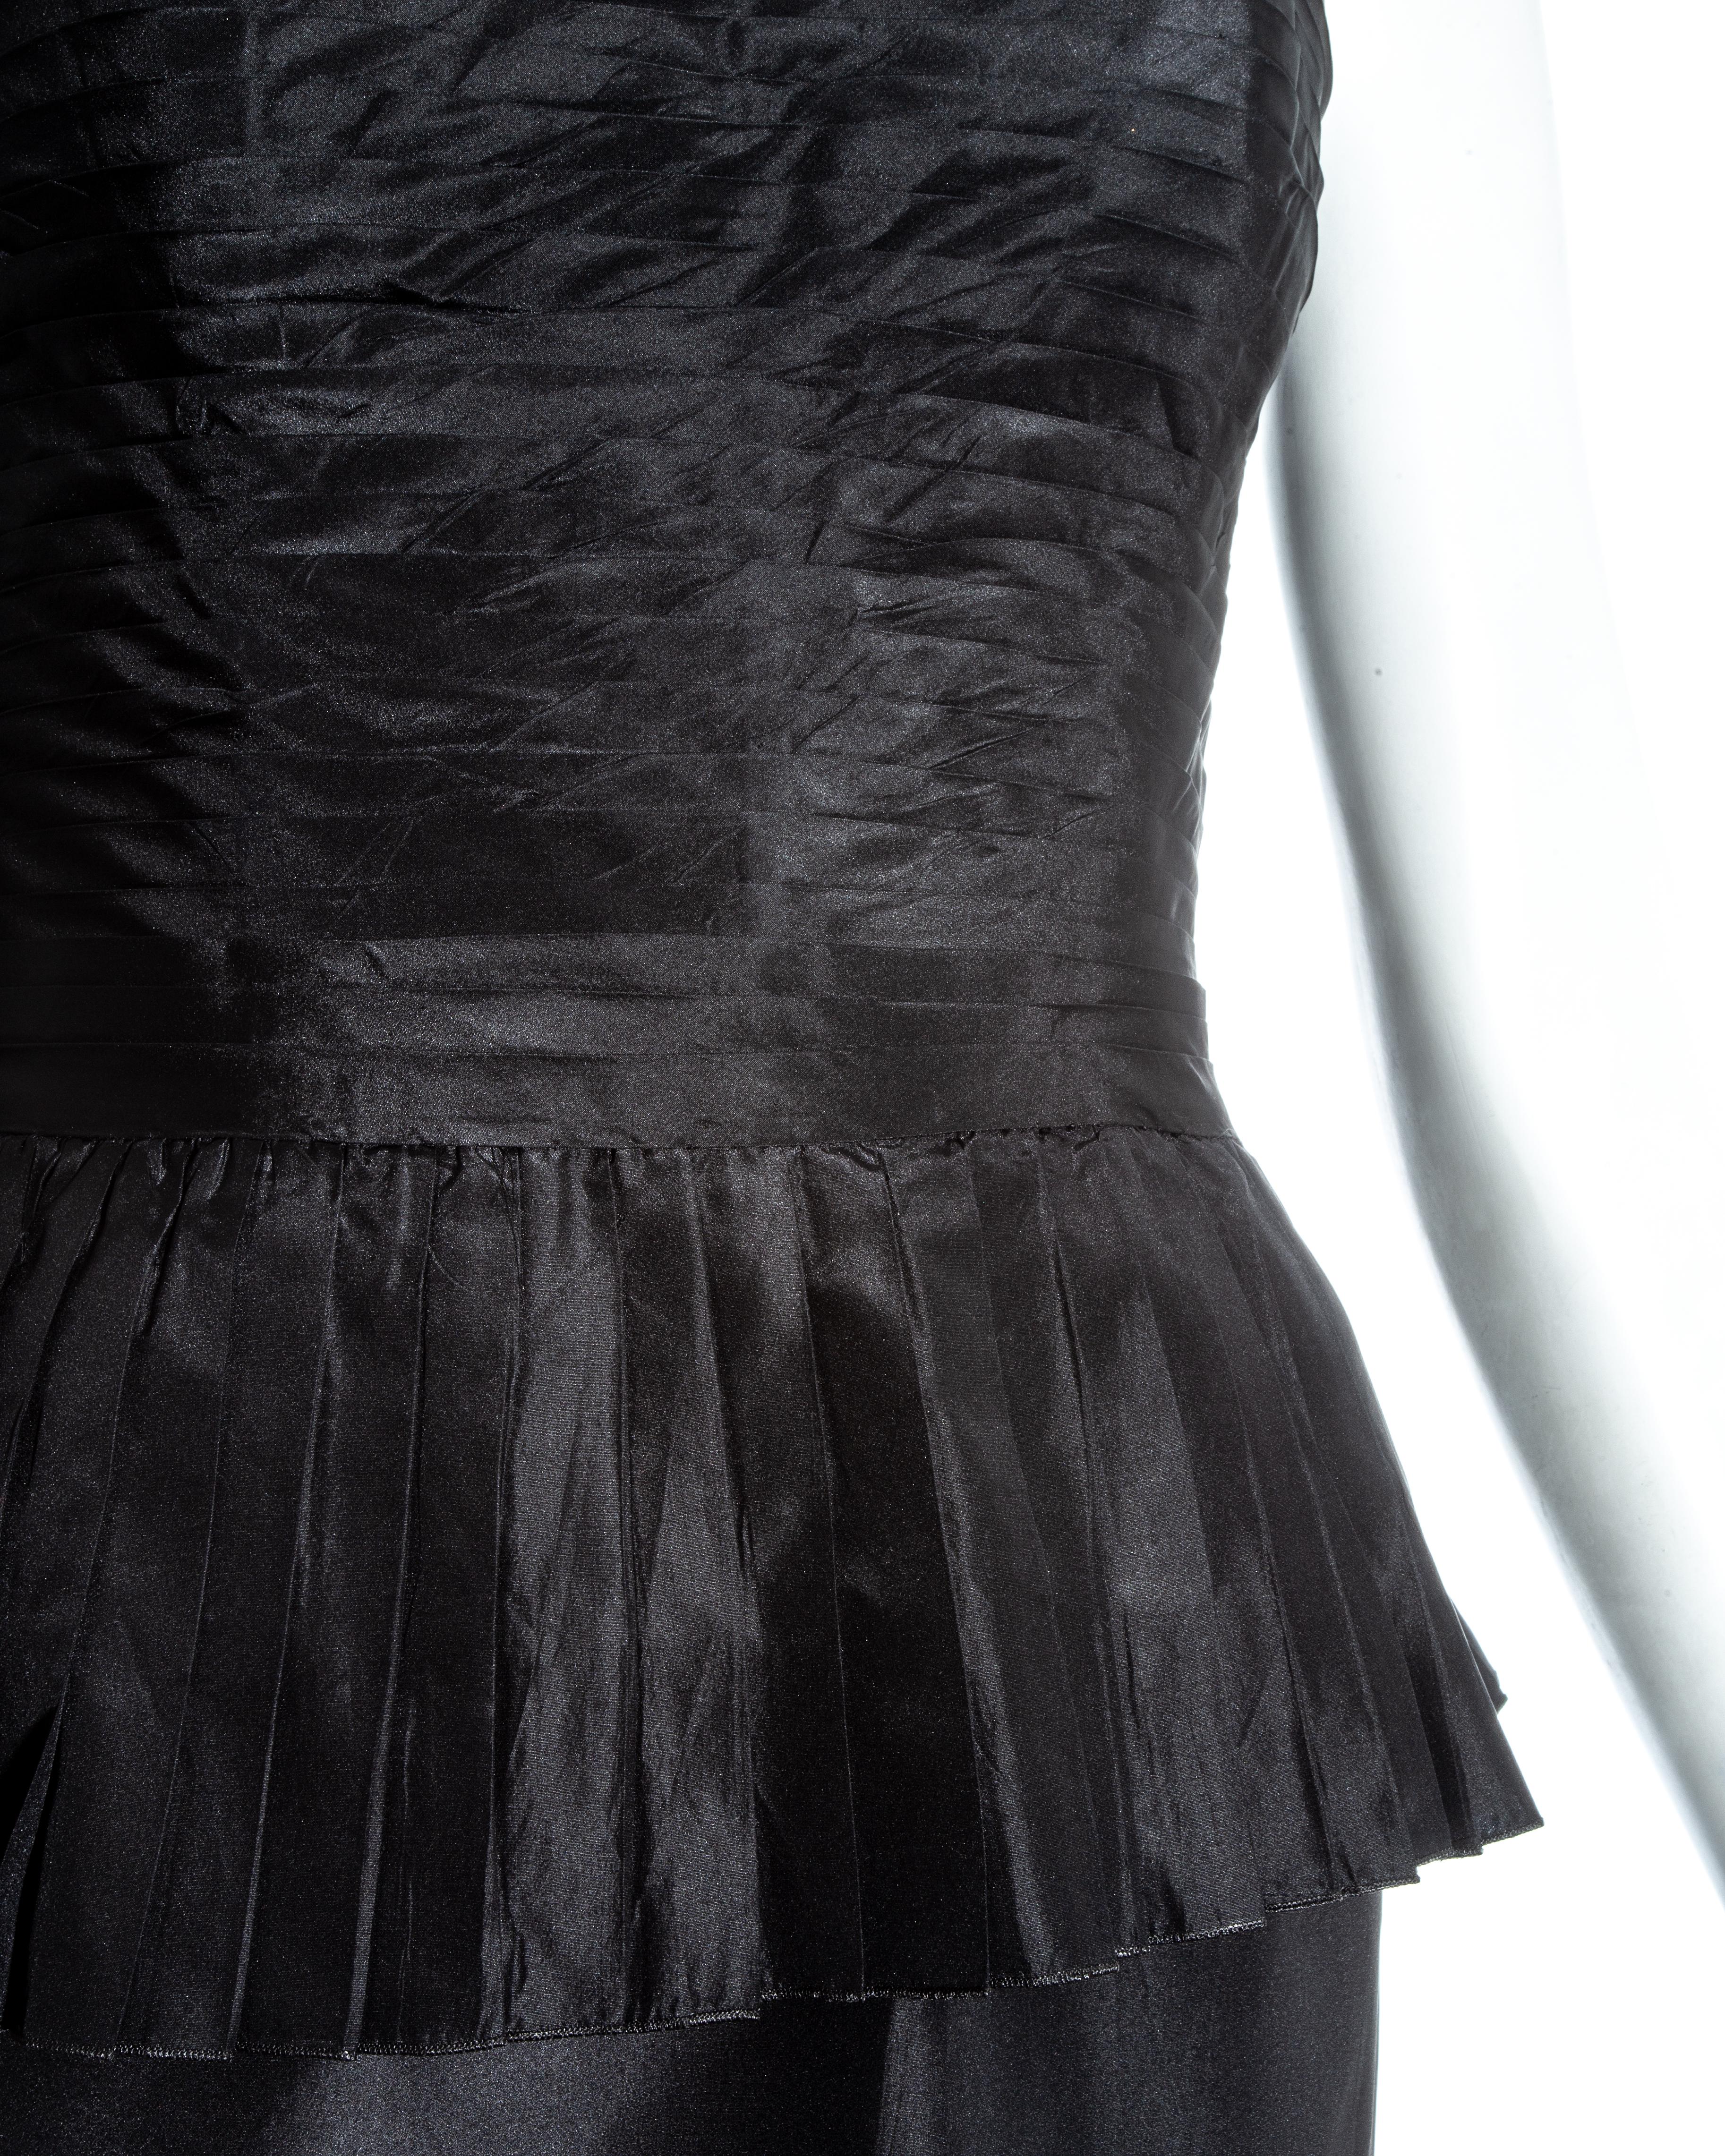 Black Chanel by Karl Lagerfeld black silk taffeta pleated evening dress, ss 1986